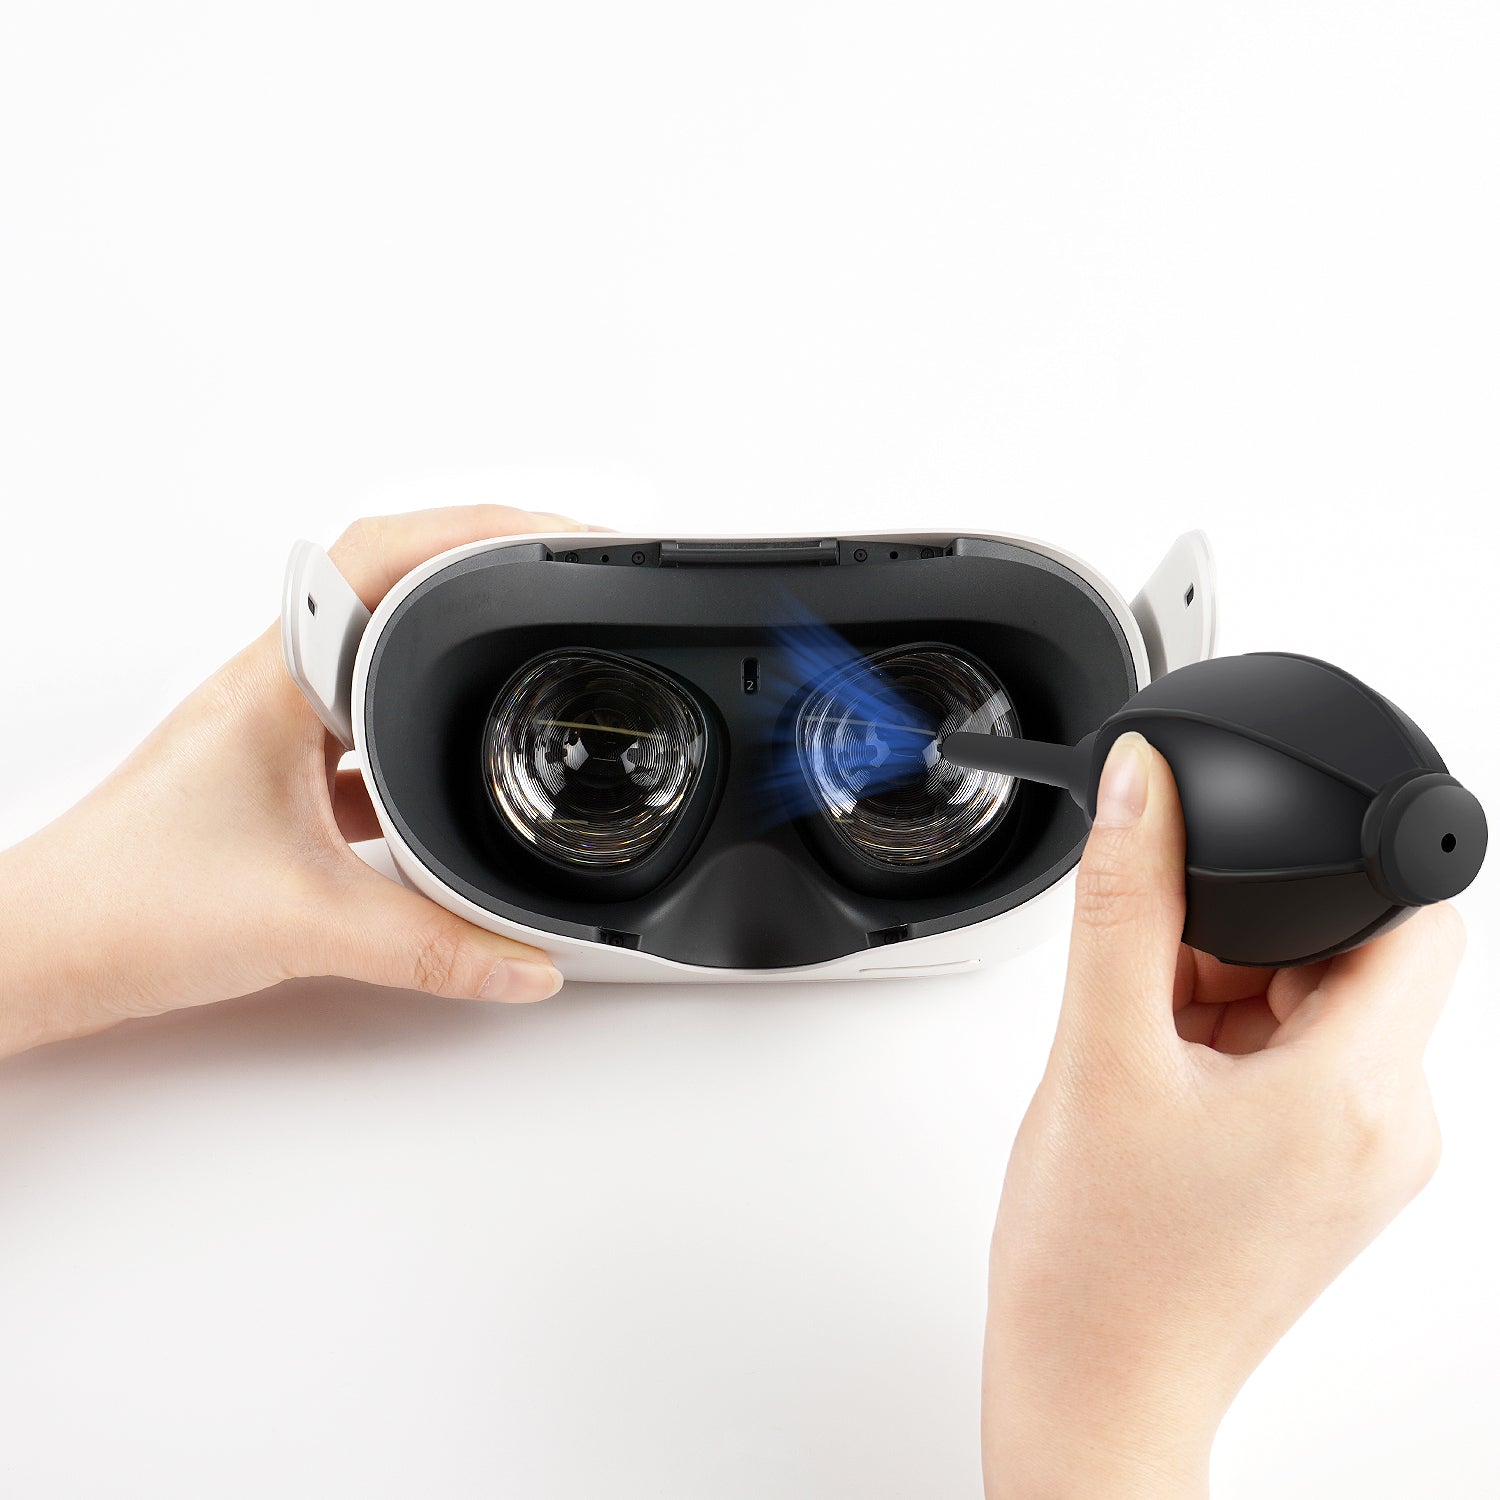 VR Park gafas VR auriculares 3D gafas de realidad Virtual VR auriculares  para IOS Android PC